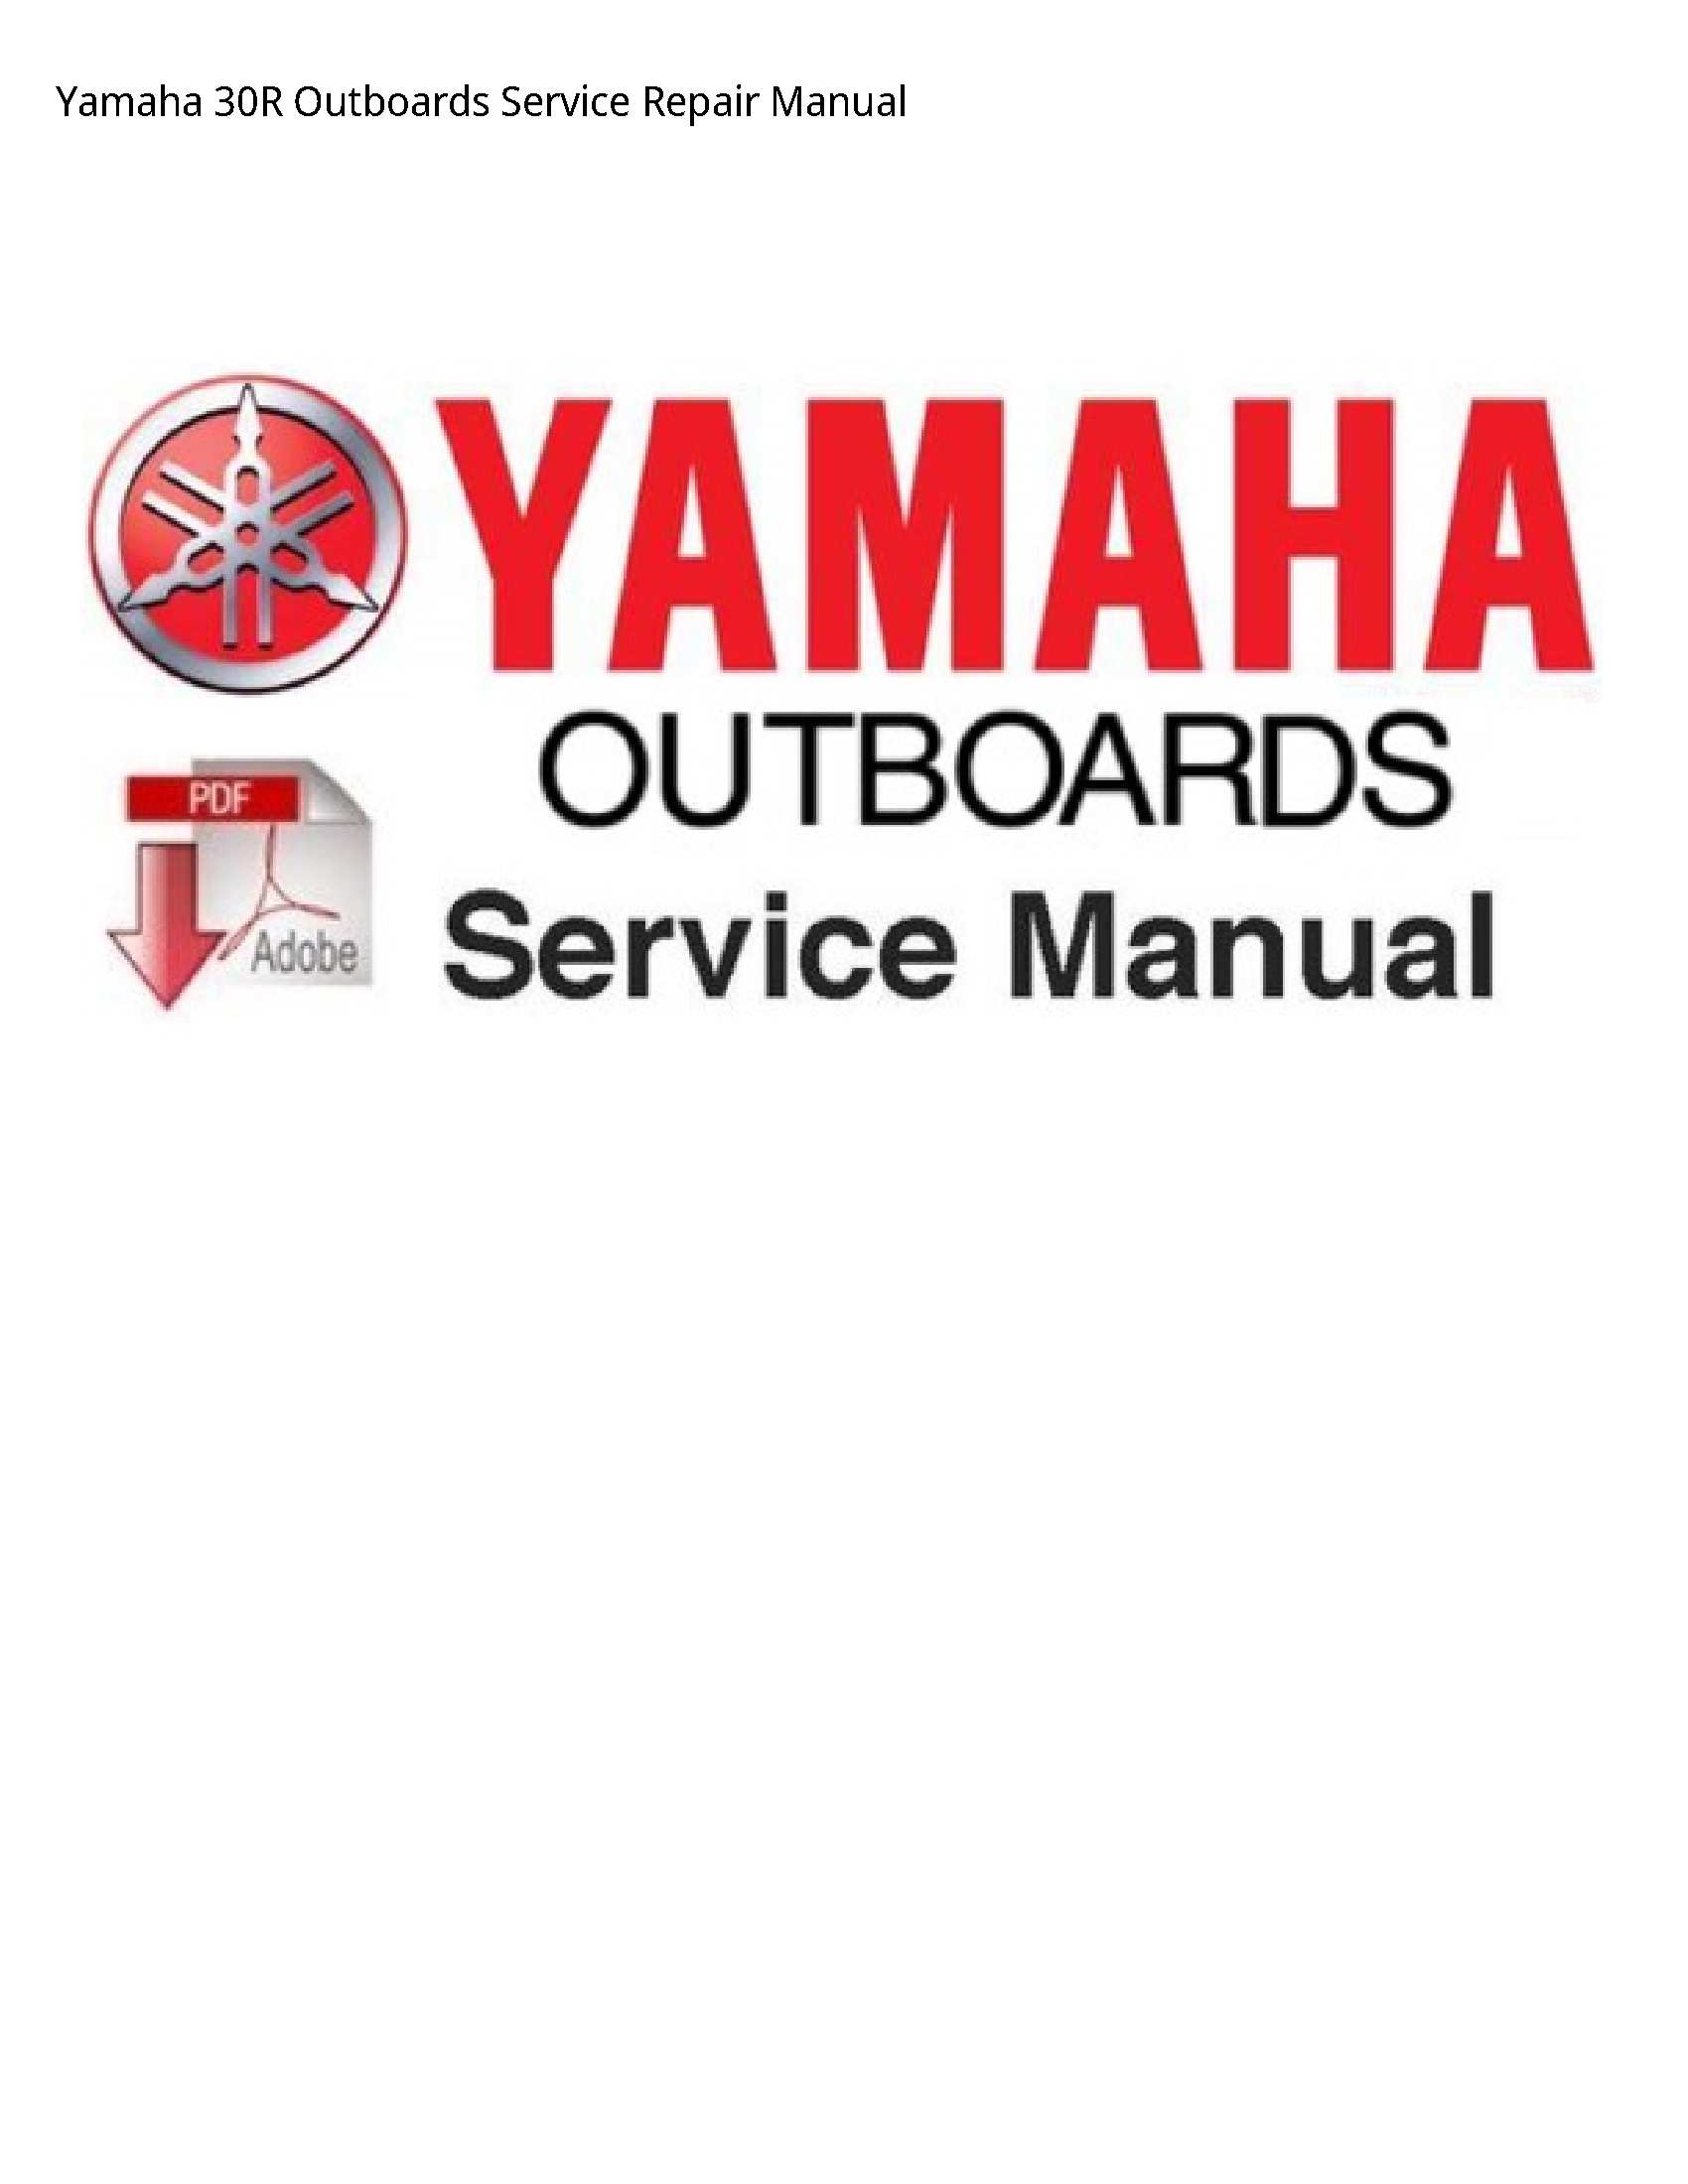 Yamaha 30R Outboards manual